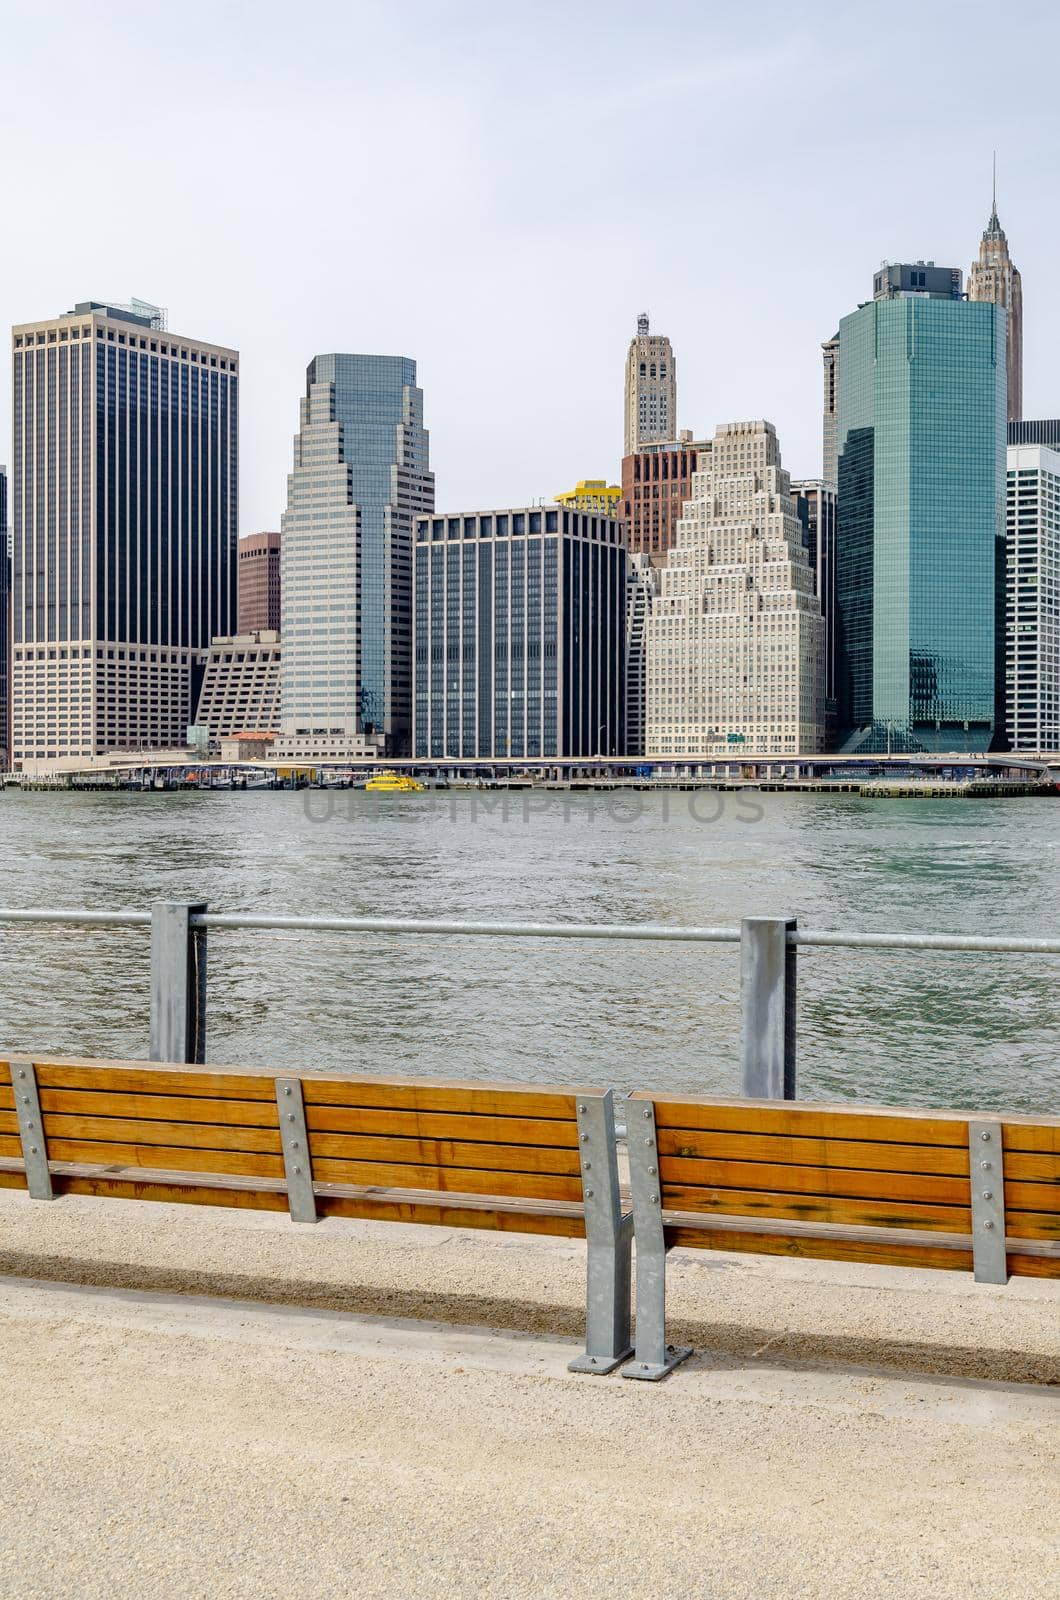 Skyline of Manhattan, New York City, view from waterfront in Brooklyn by bildgigant